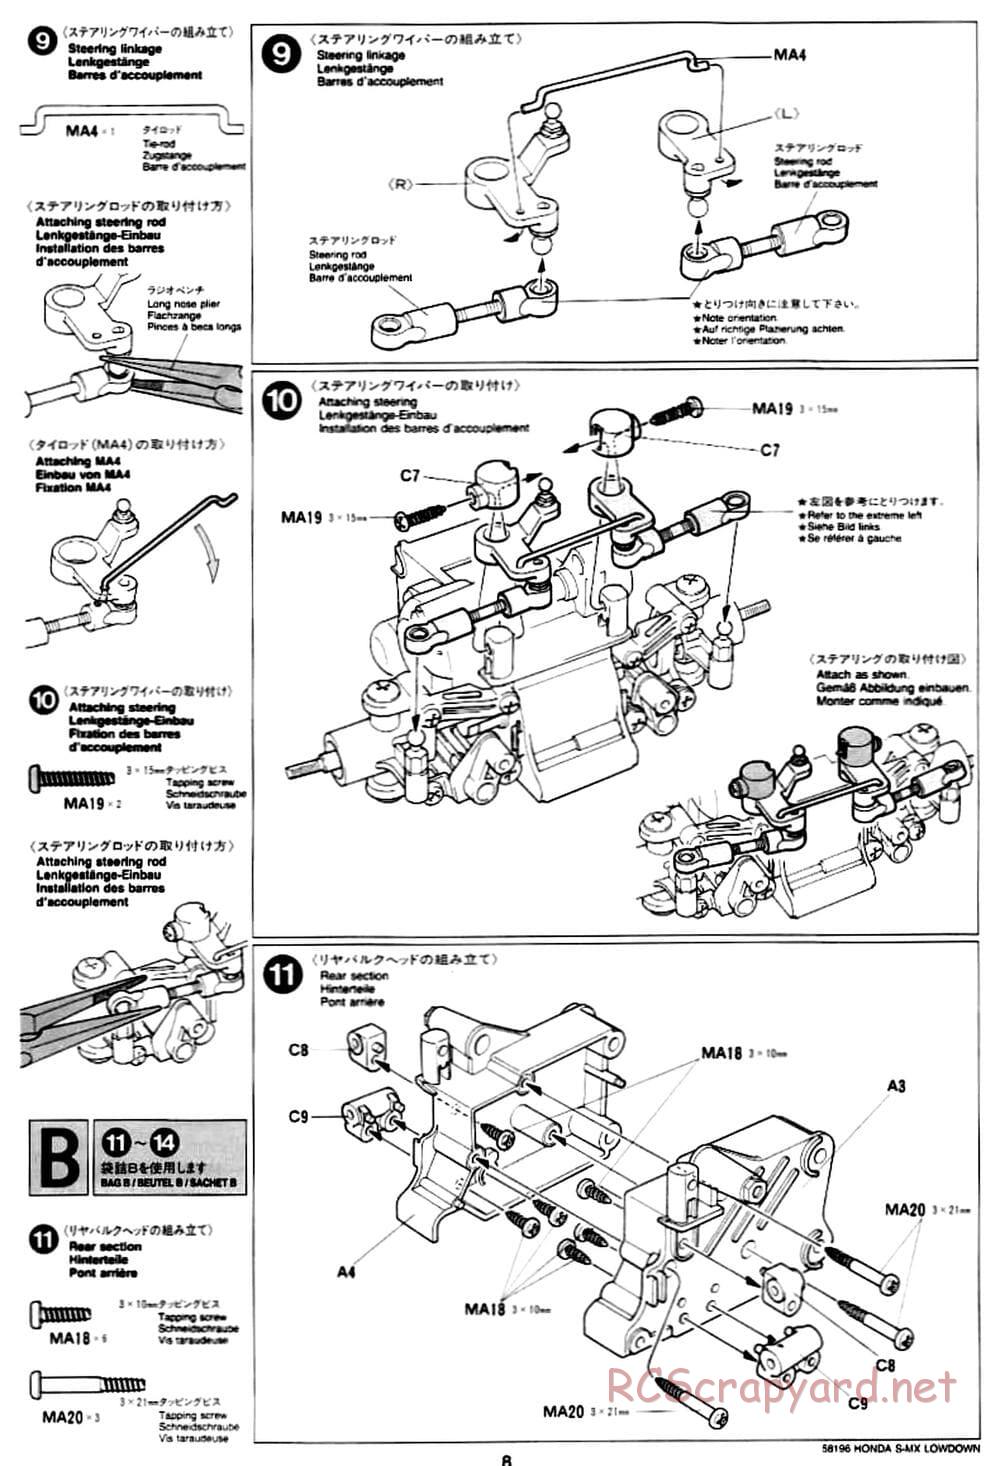 Tamiya - Honda S-MX Lowdown - M01 Chassis - Manual - Page 8